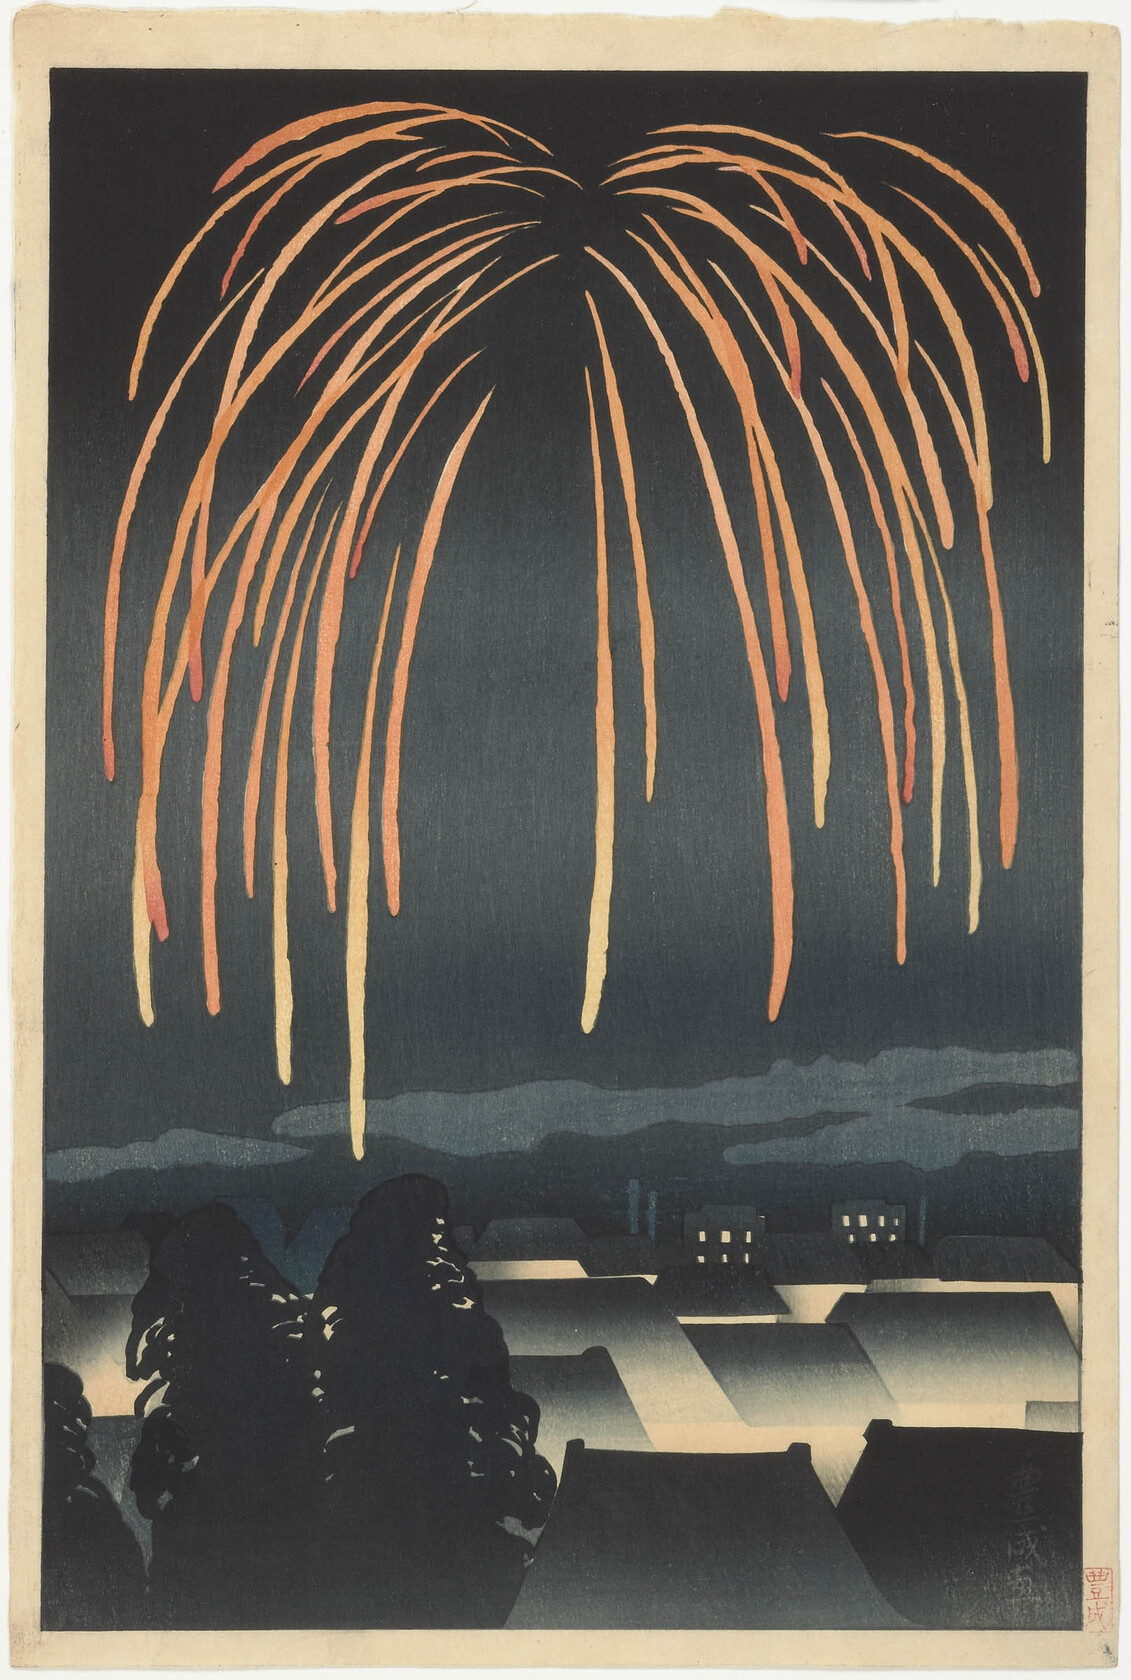 奉祝の夜 by Yamamura Toyonari (Kôka) - 1924 - 39.53 × 26.51 cm 